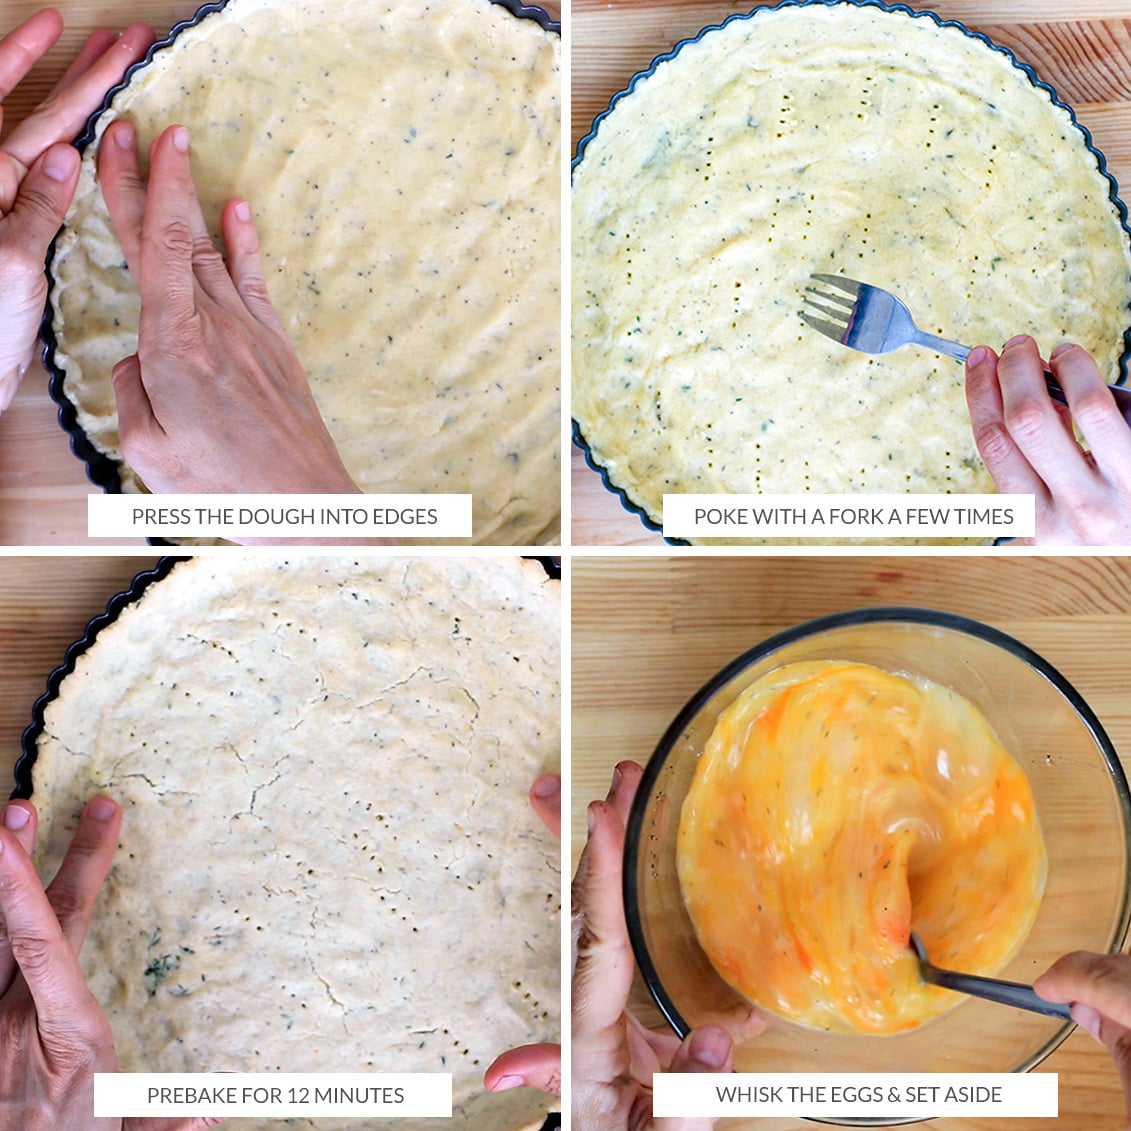 How to make grain-free, gluten-free tart crust - shaping the base